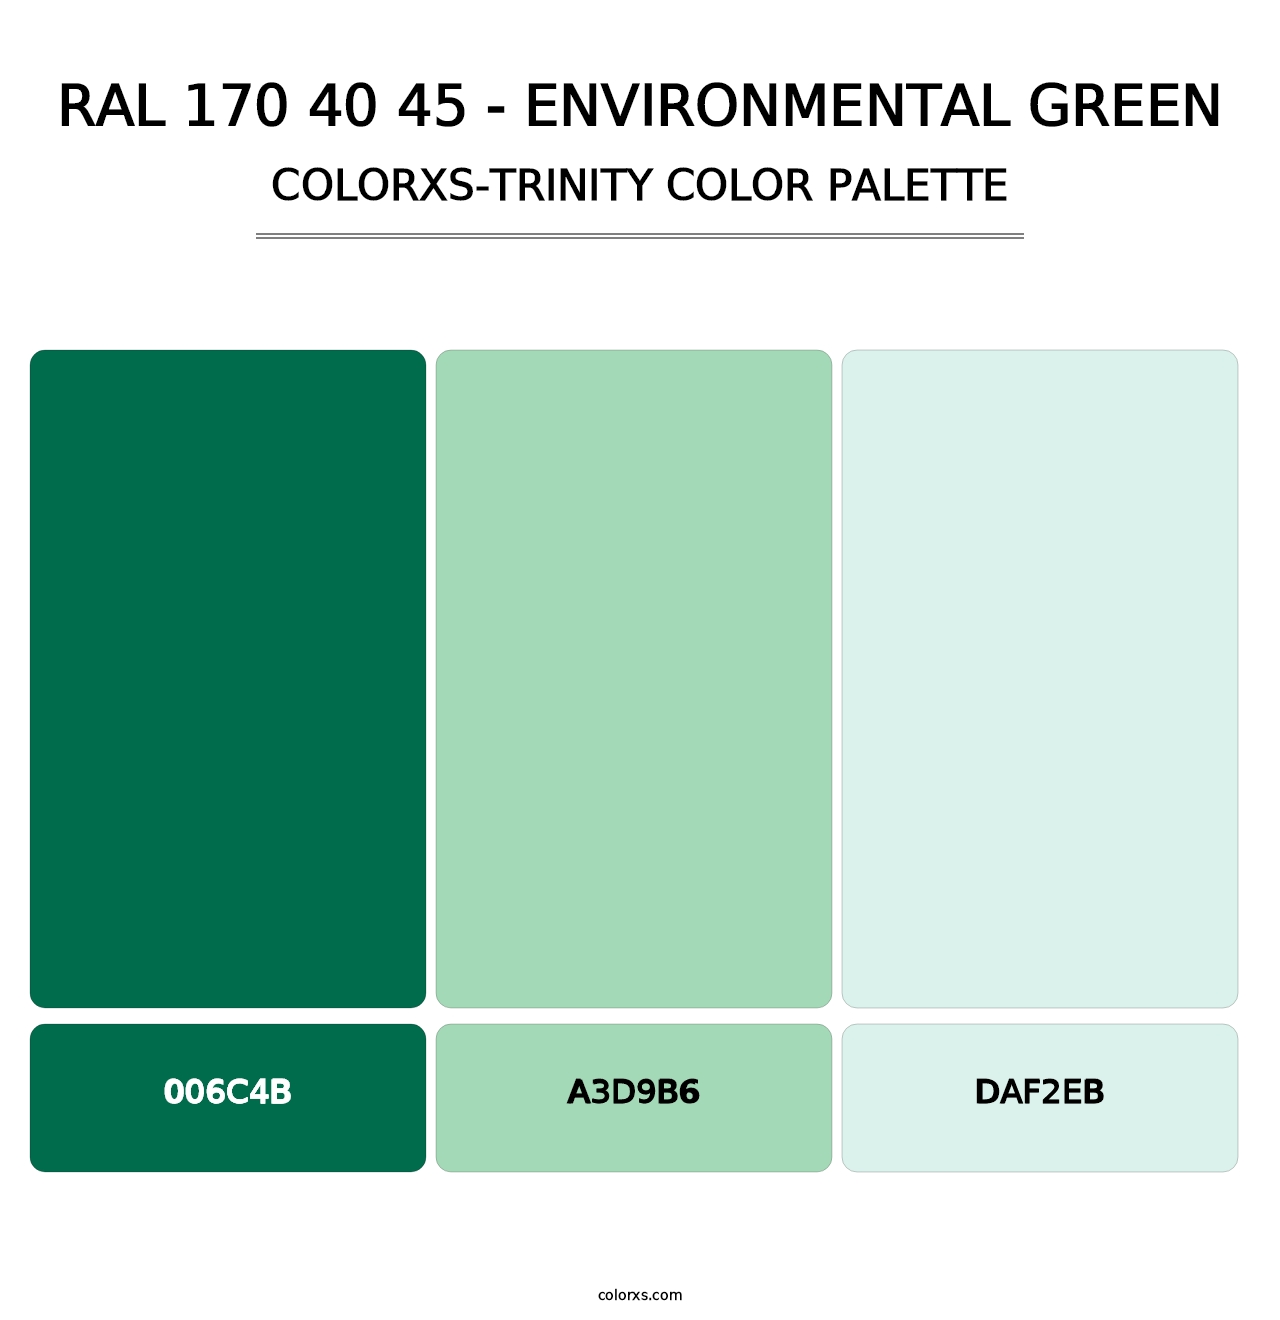 RAL 170 40 45 - Environmental Green - Colorxs Trinity Palette